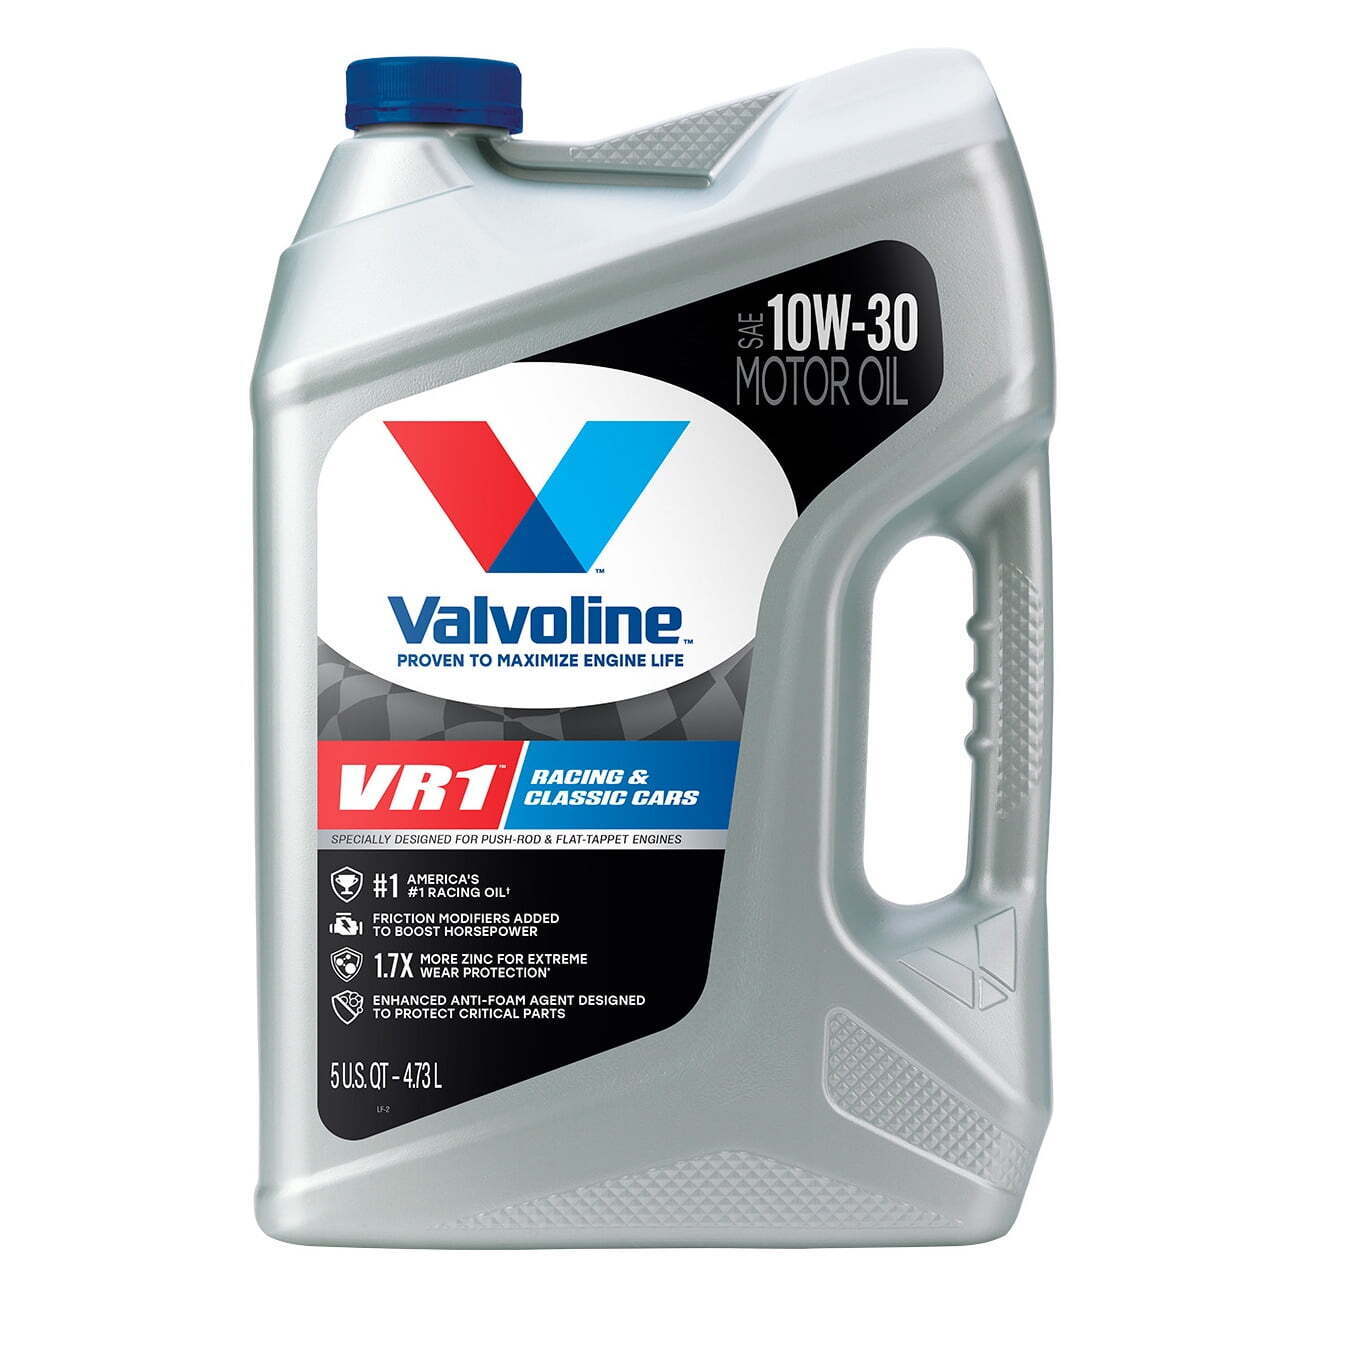 Valvoline VR1 Racing 10W-30 Motor Oil 5 QT，Advanced Additives，NEW